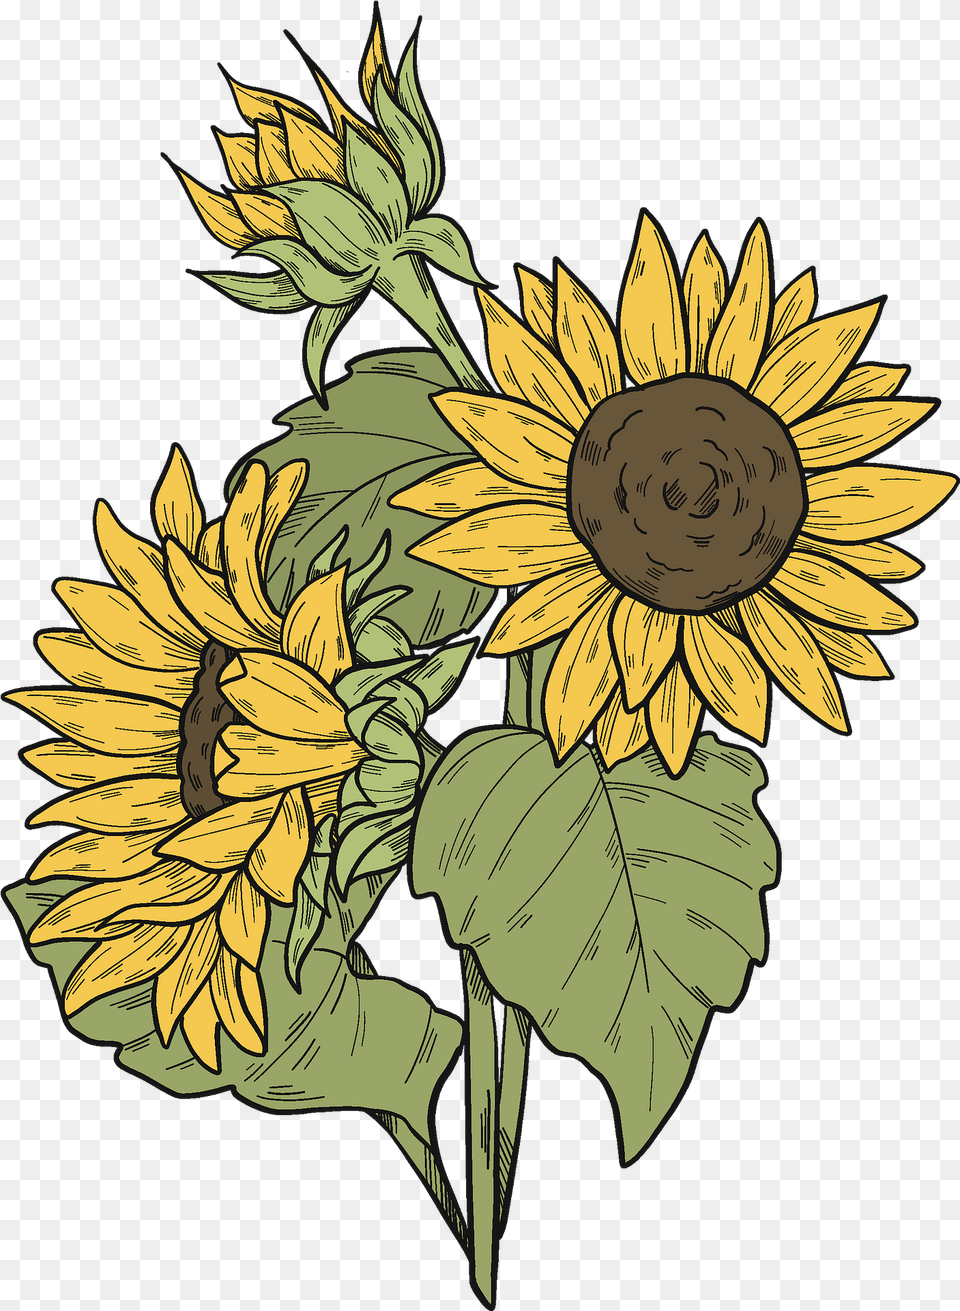 Sunflowers Clipart Download Creazilla Clipart Images Of Sunflowers, Flower, Plant, Sunflower Free Png